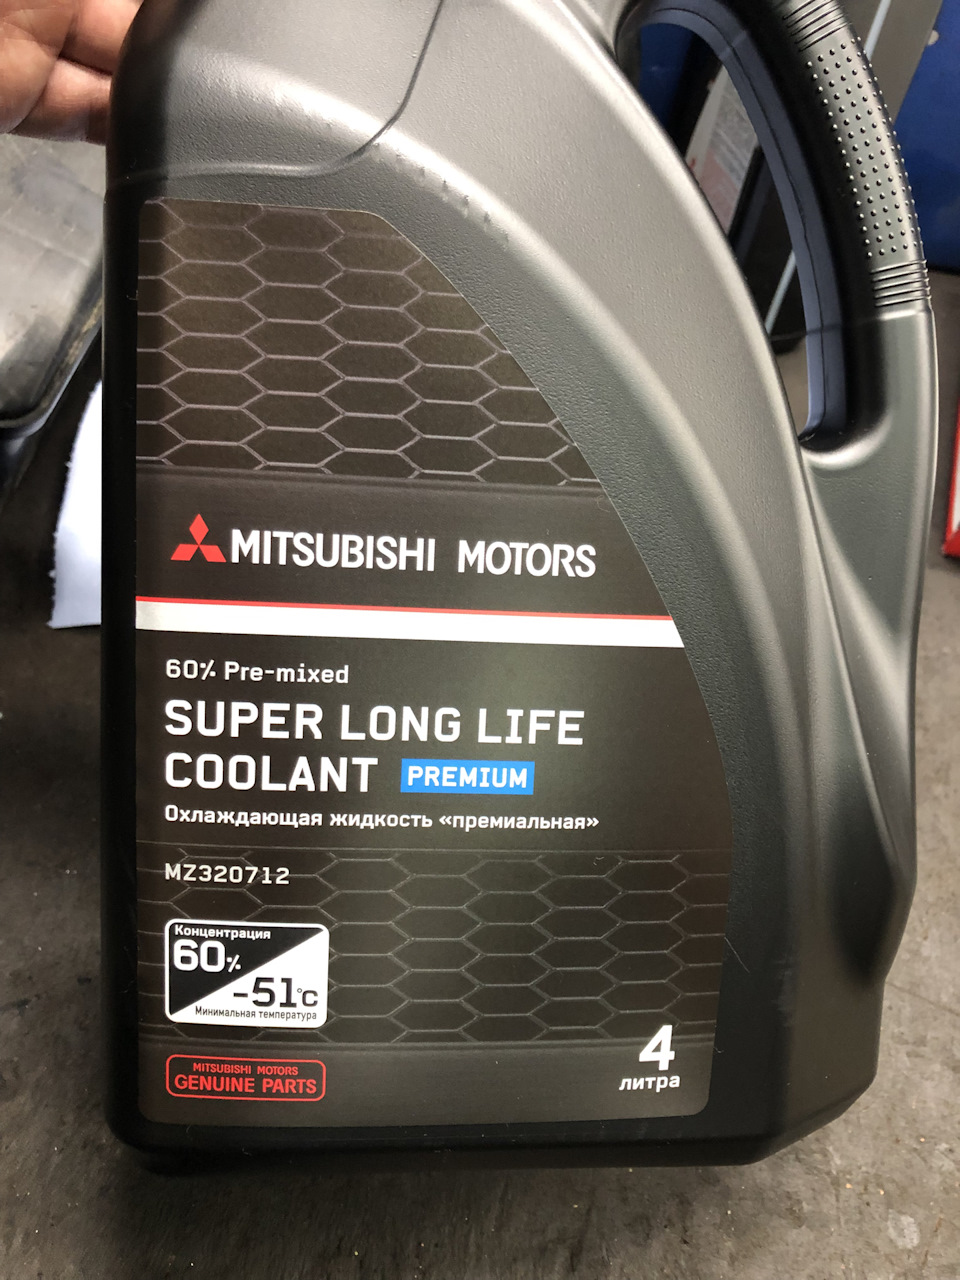 Genuine super long life coolant. Mitsubishi super long Life Coolant Premium. Mitsubishi Motors Genuine super long Life Coolant Premium. Mz320712. Mz320712 1 литр.